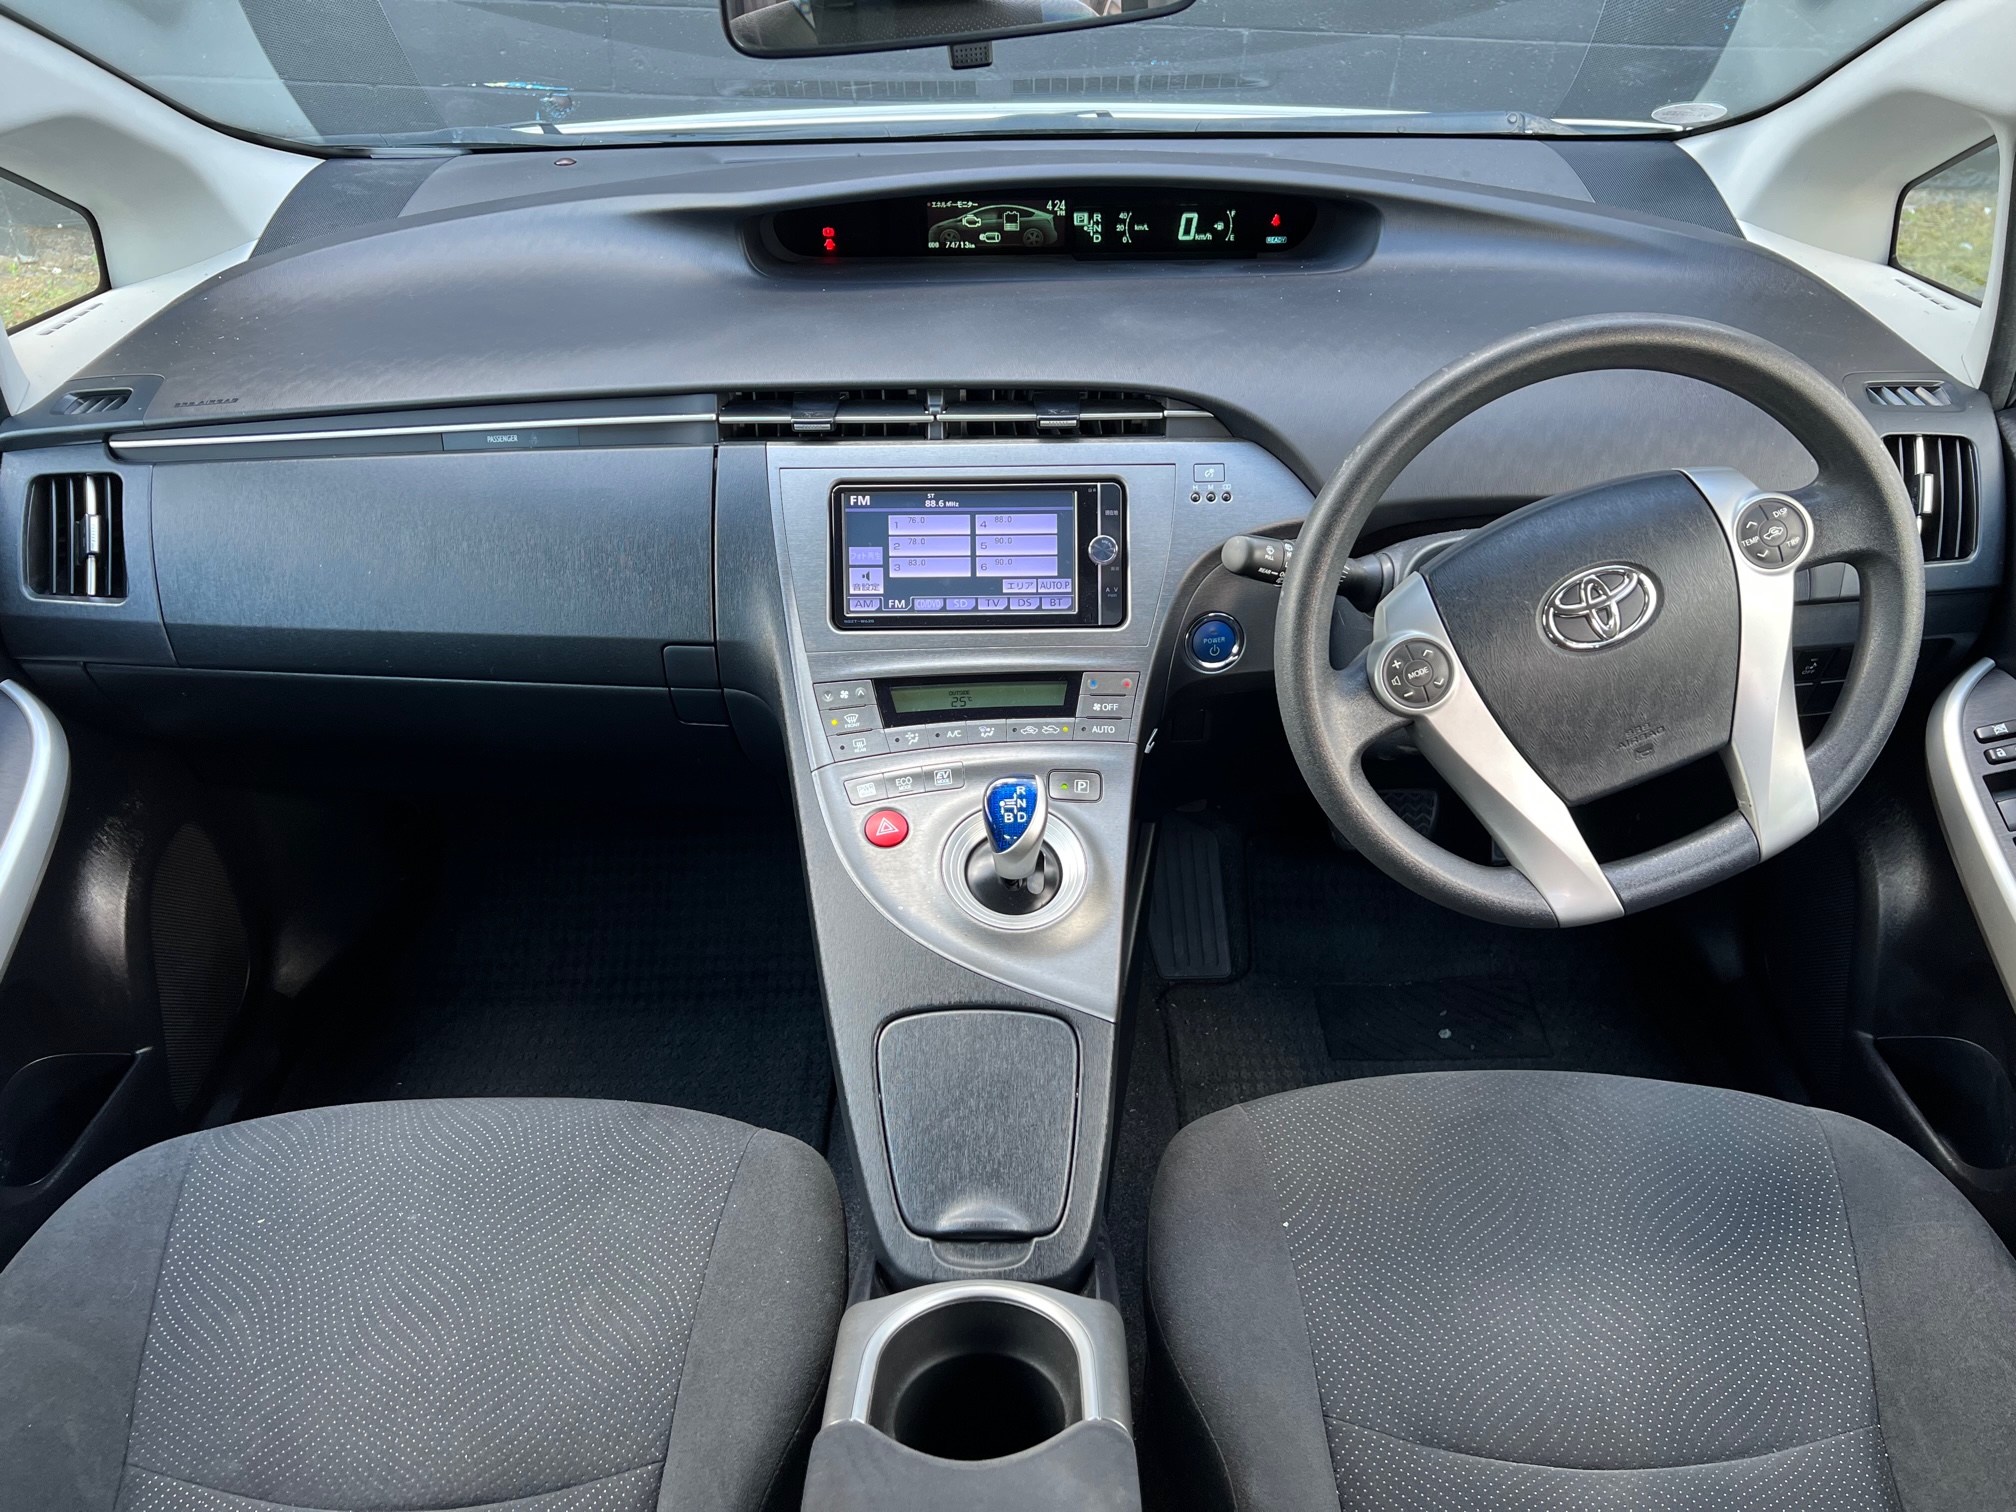 Toyota Prius 2013 Image 12